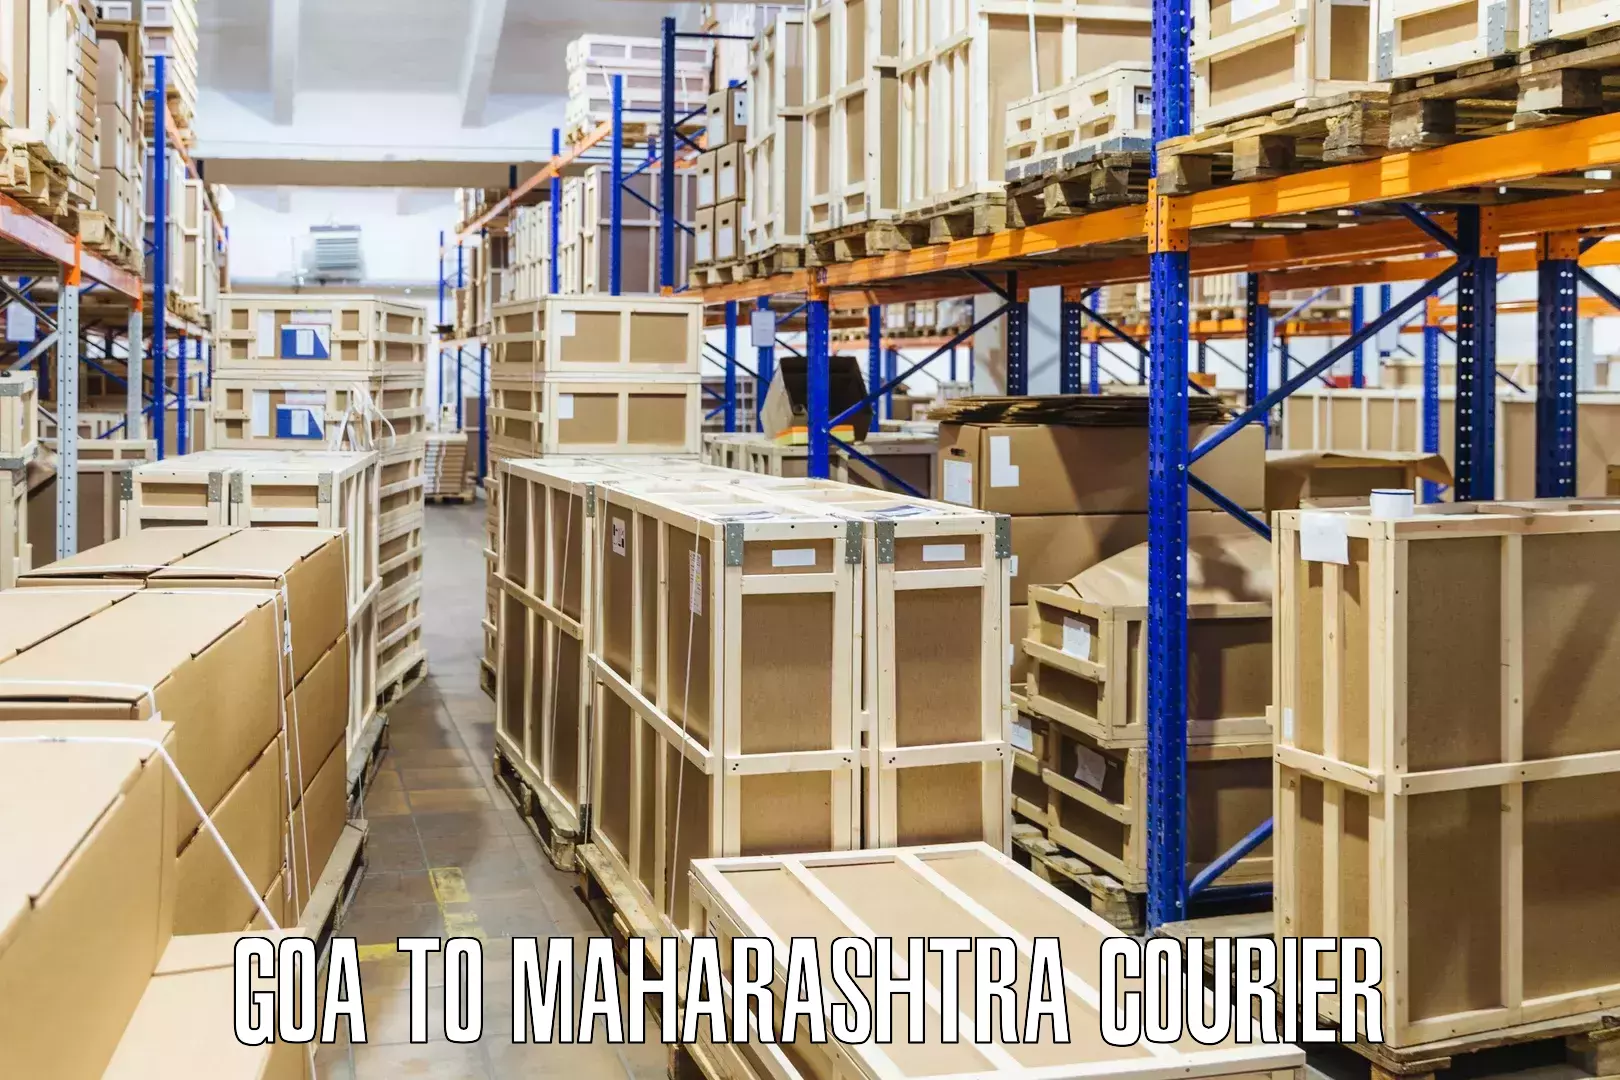 Scheduled delivery Goa to Maharashtra